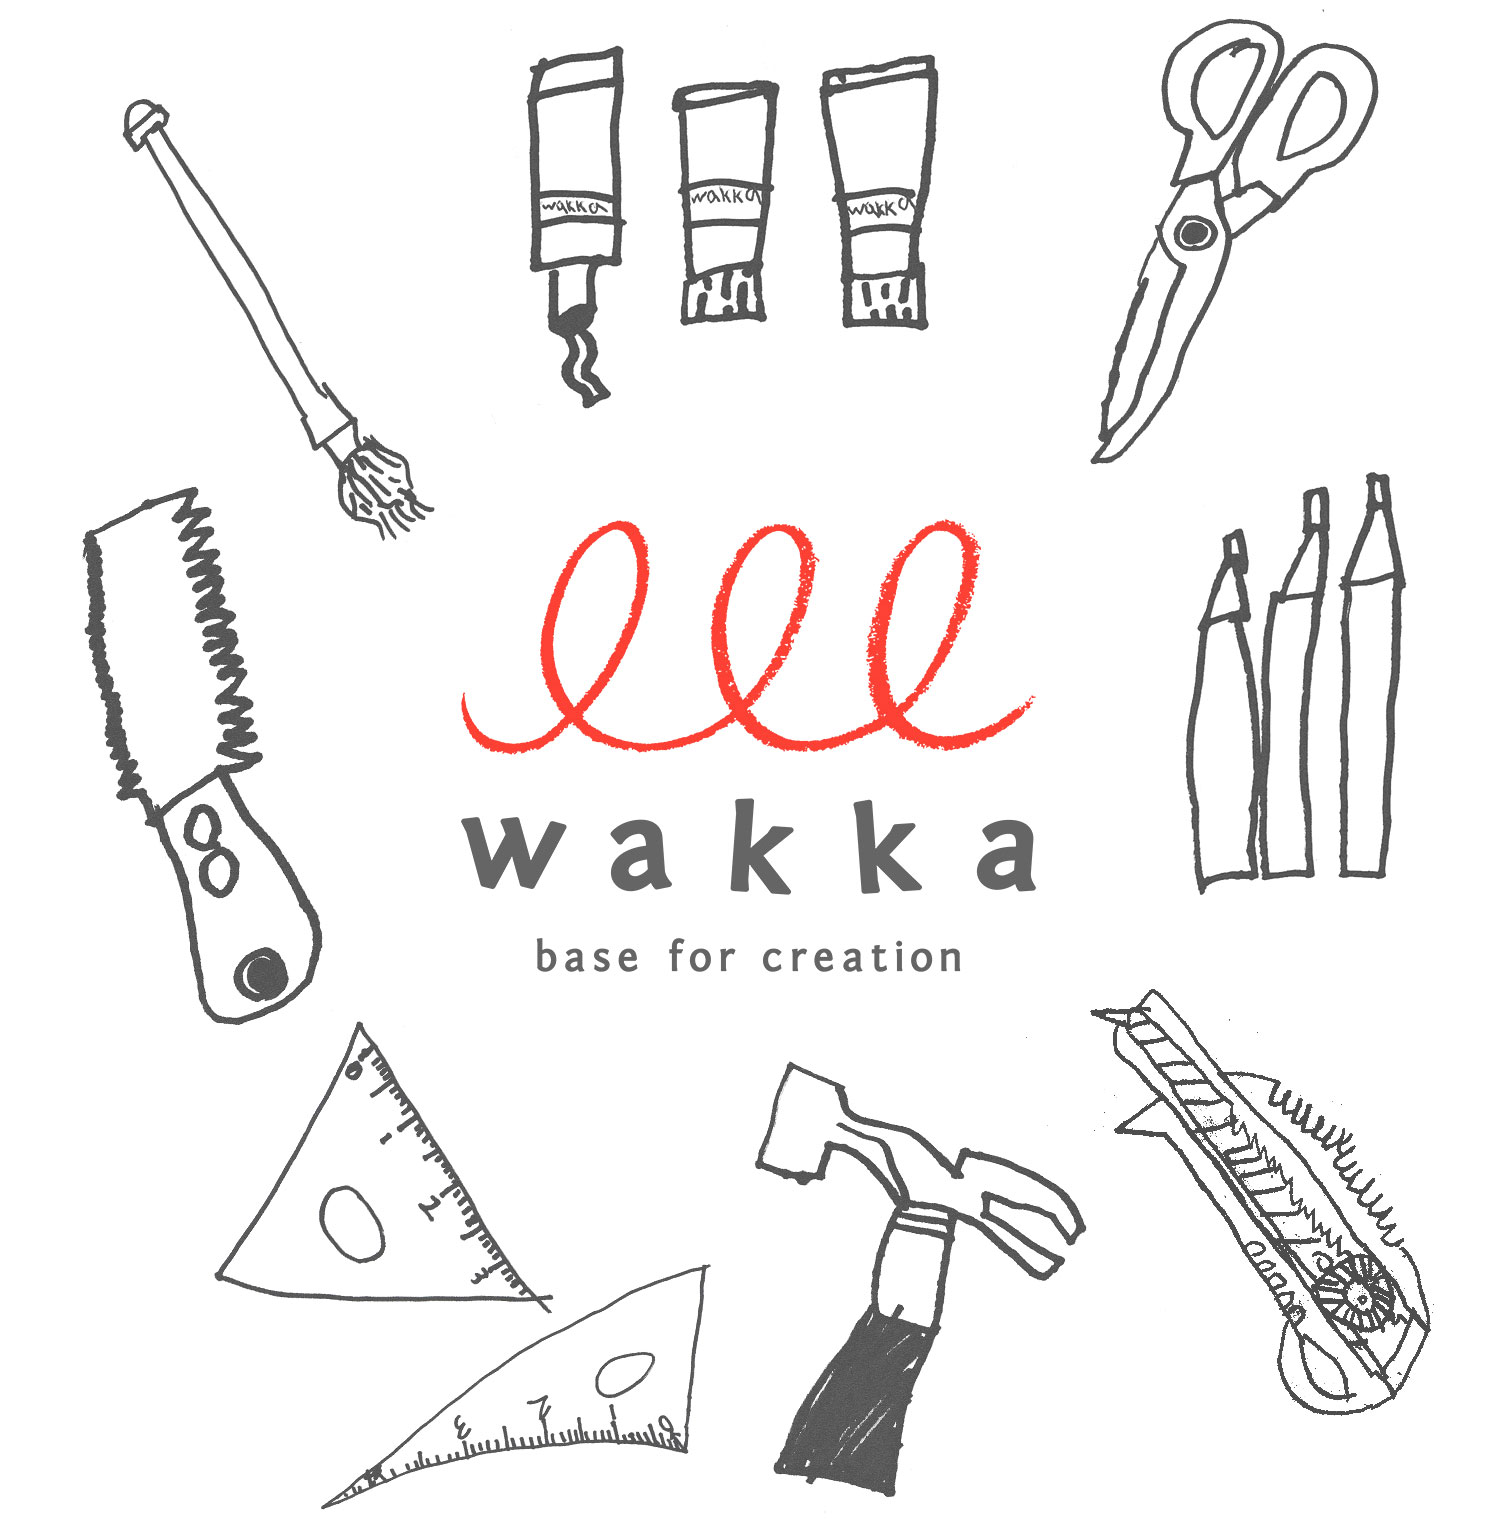 wakka base for creation